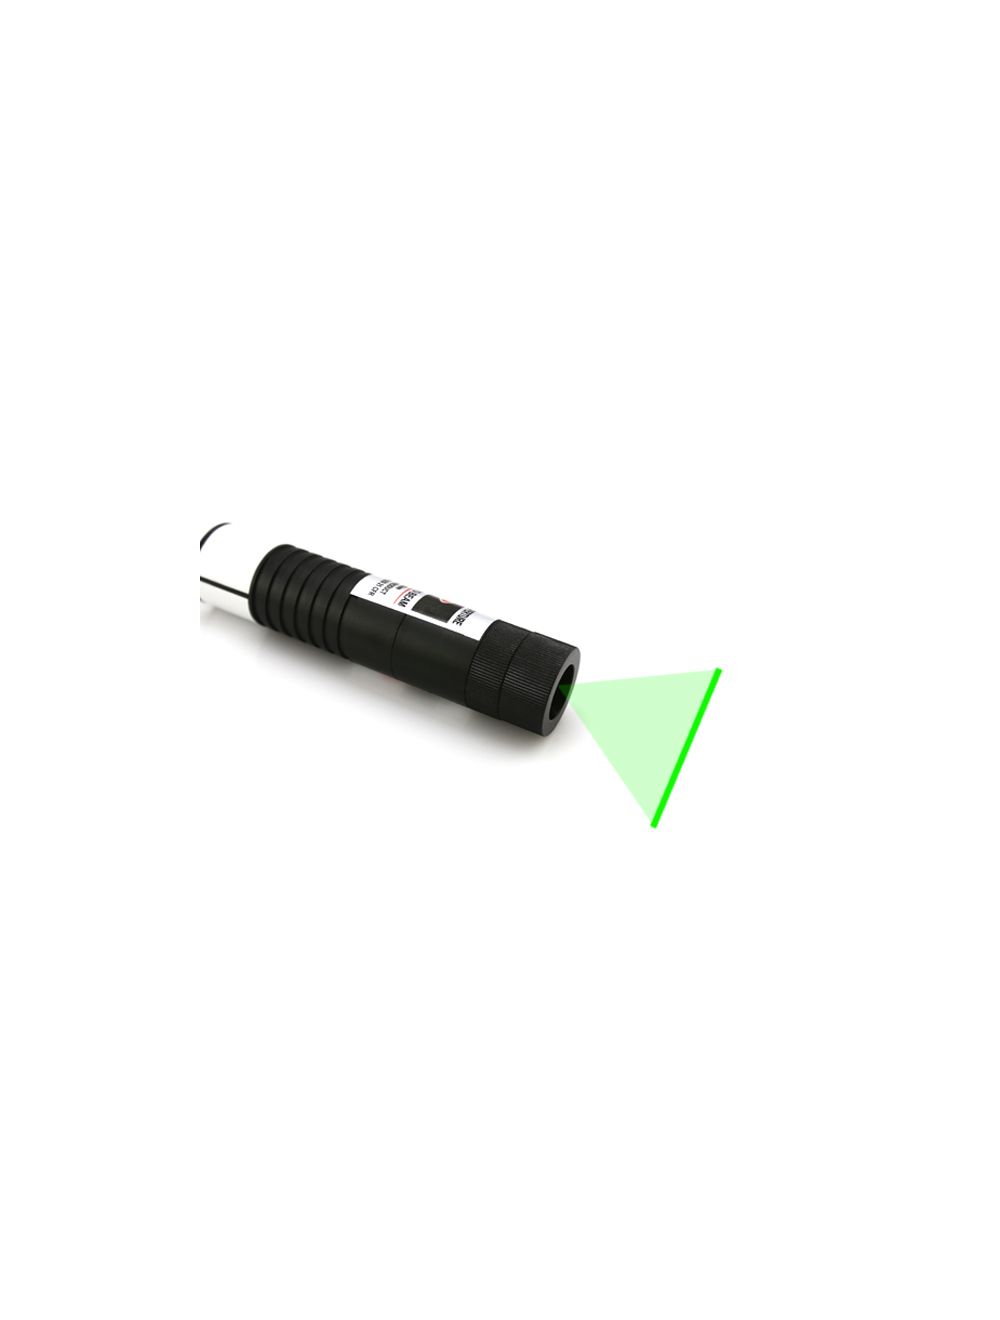 532nm green line laser module